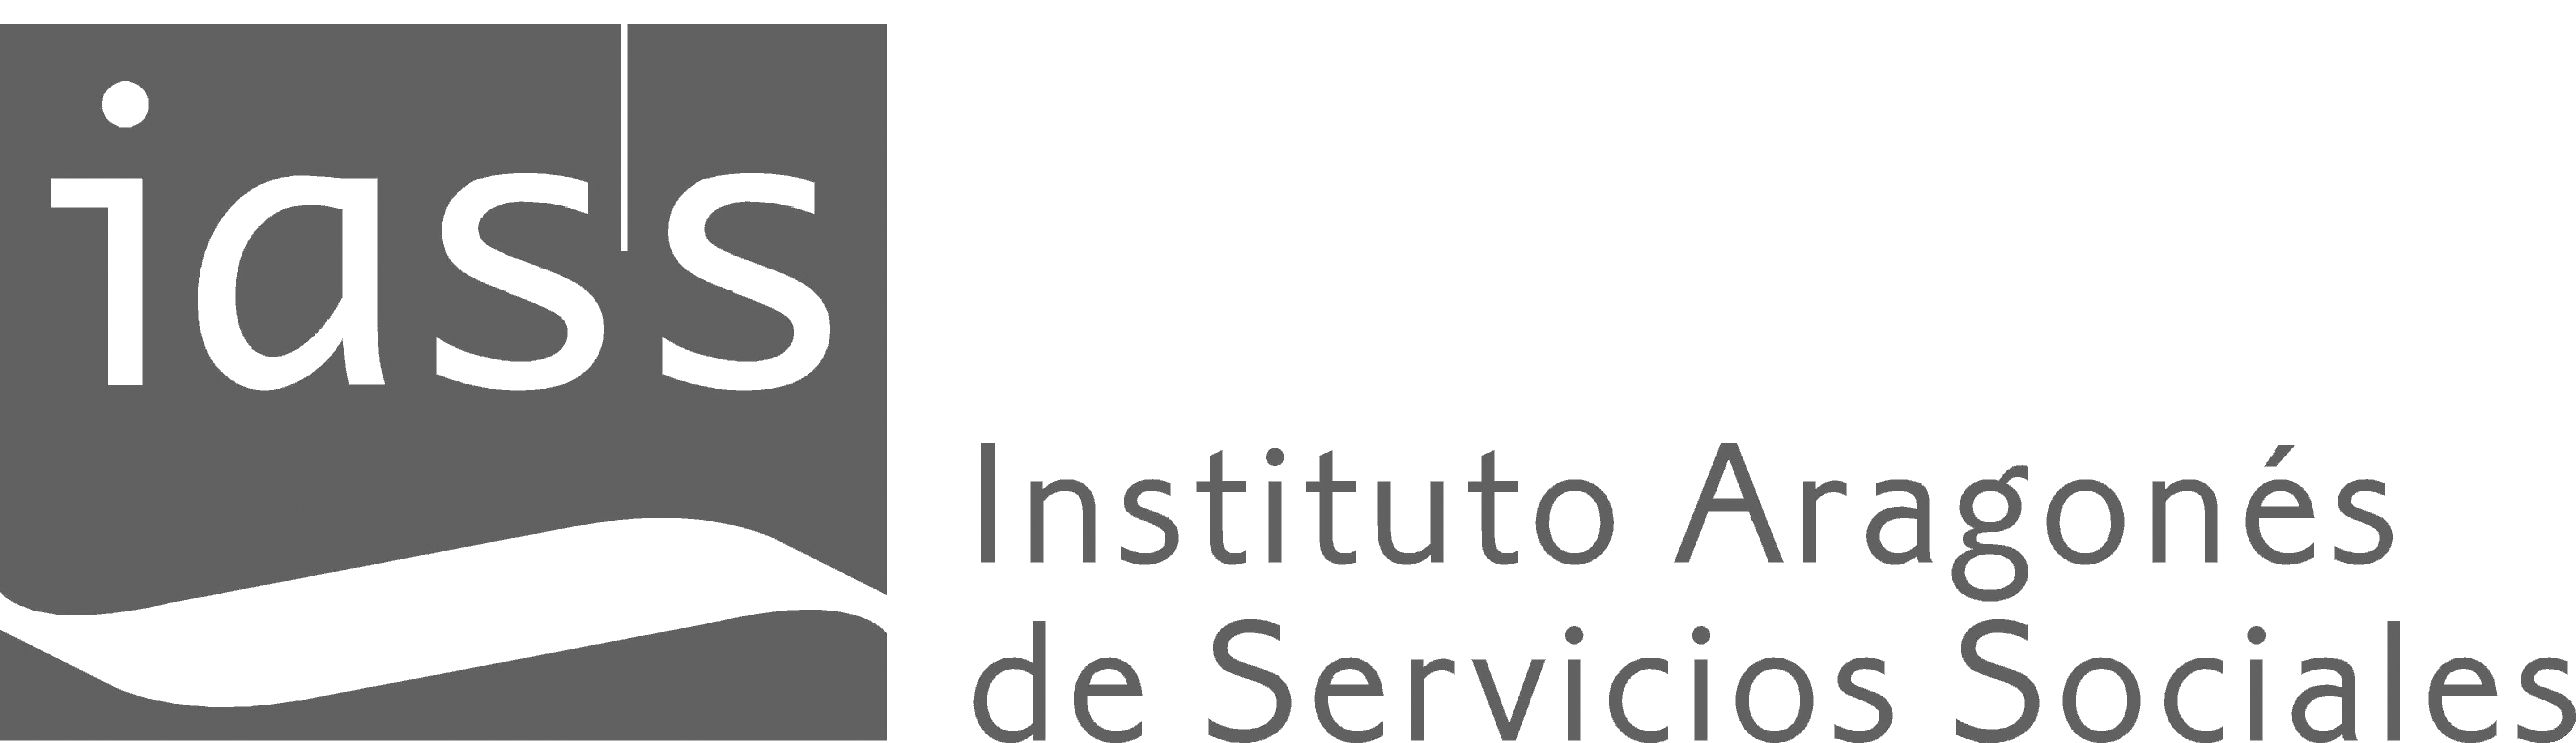 Logotipo del IASS